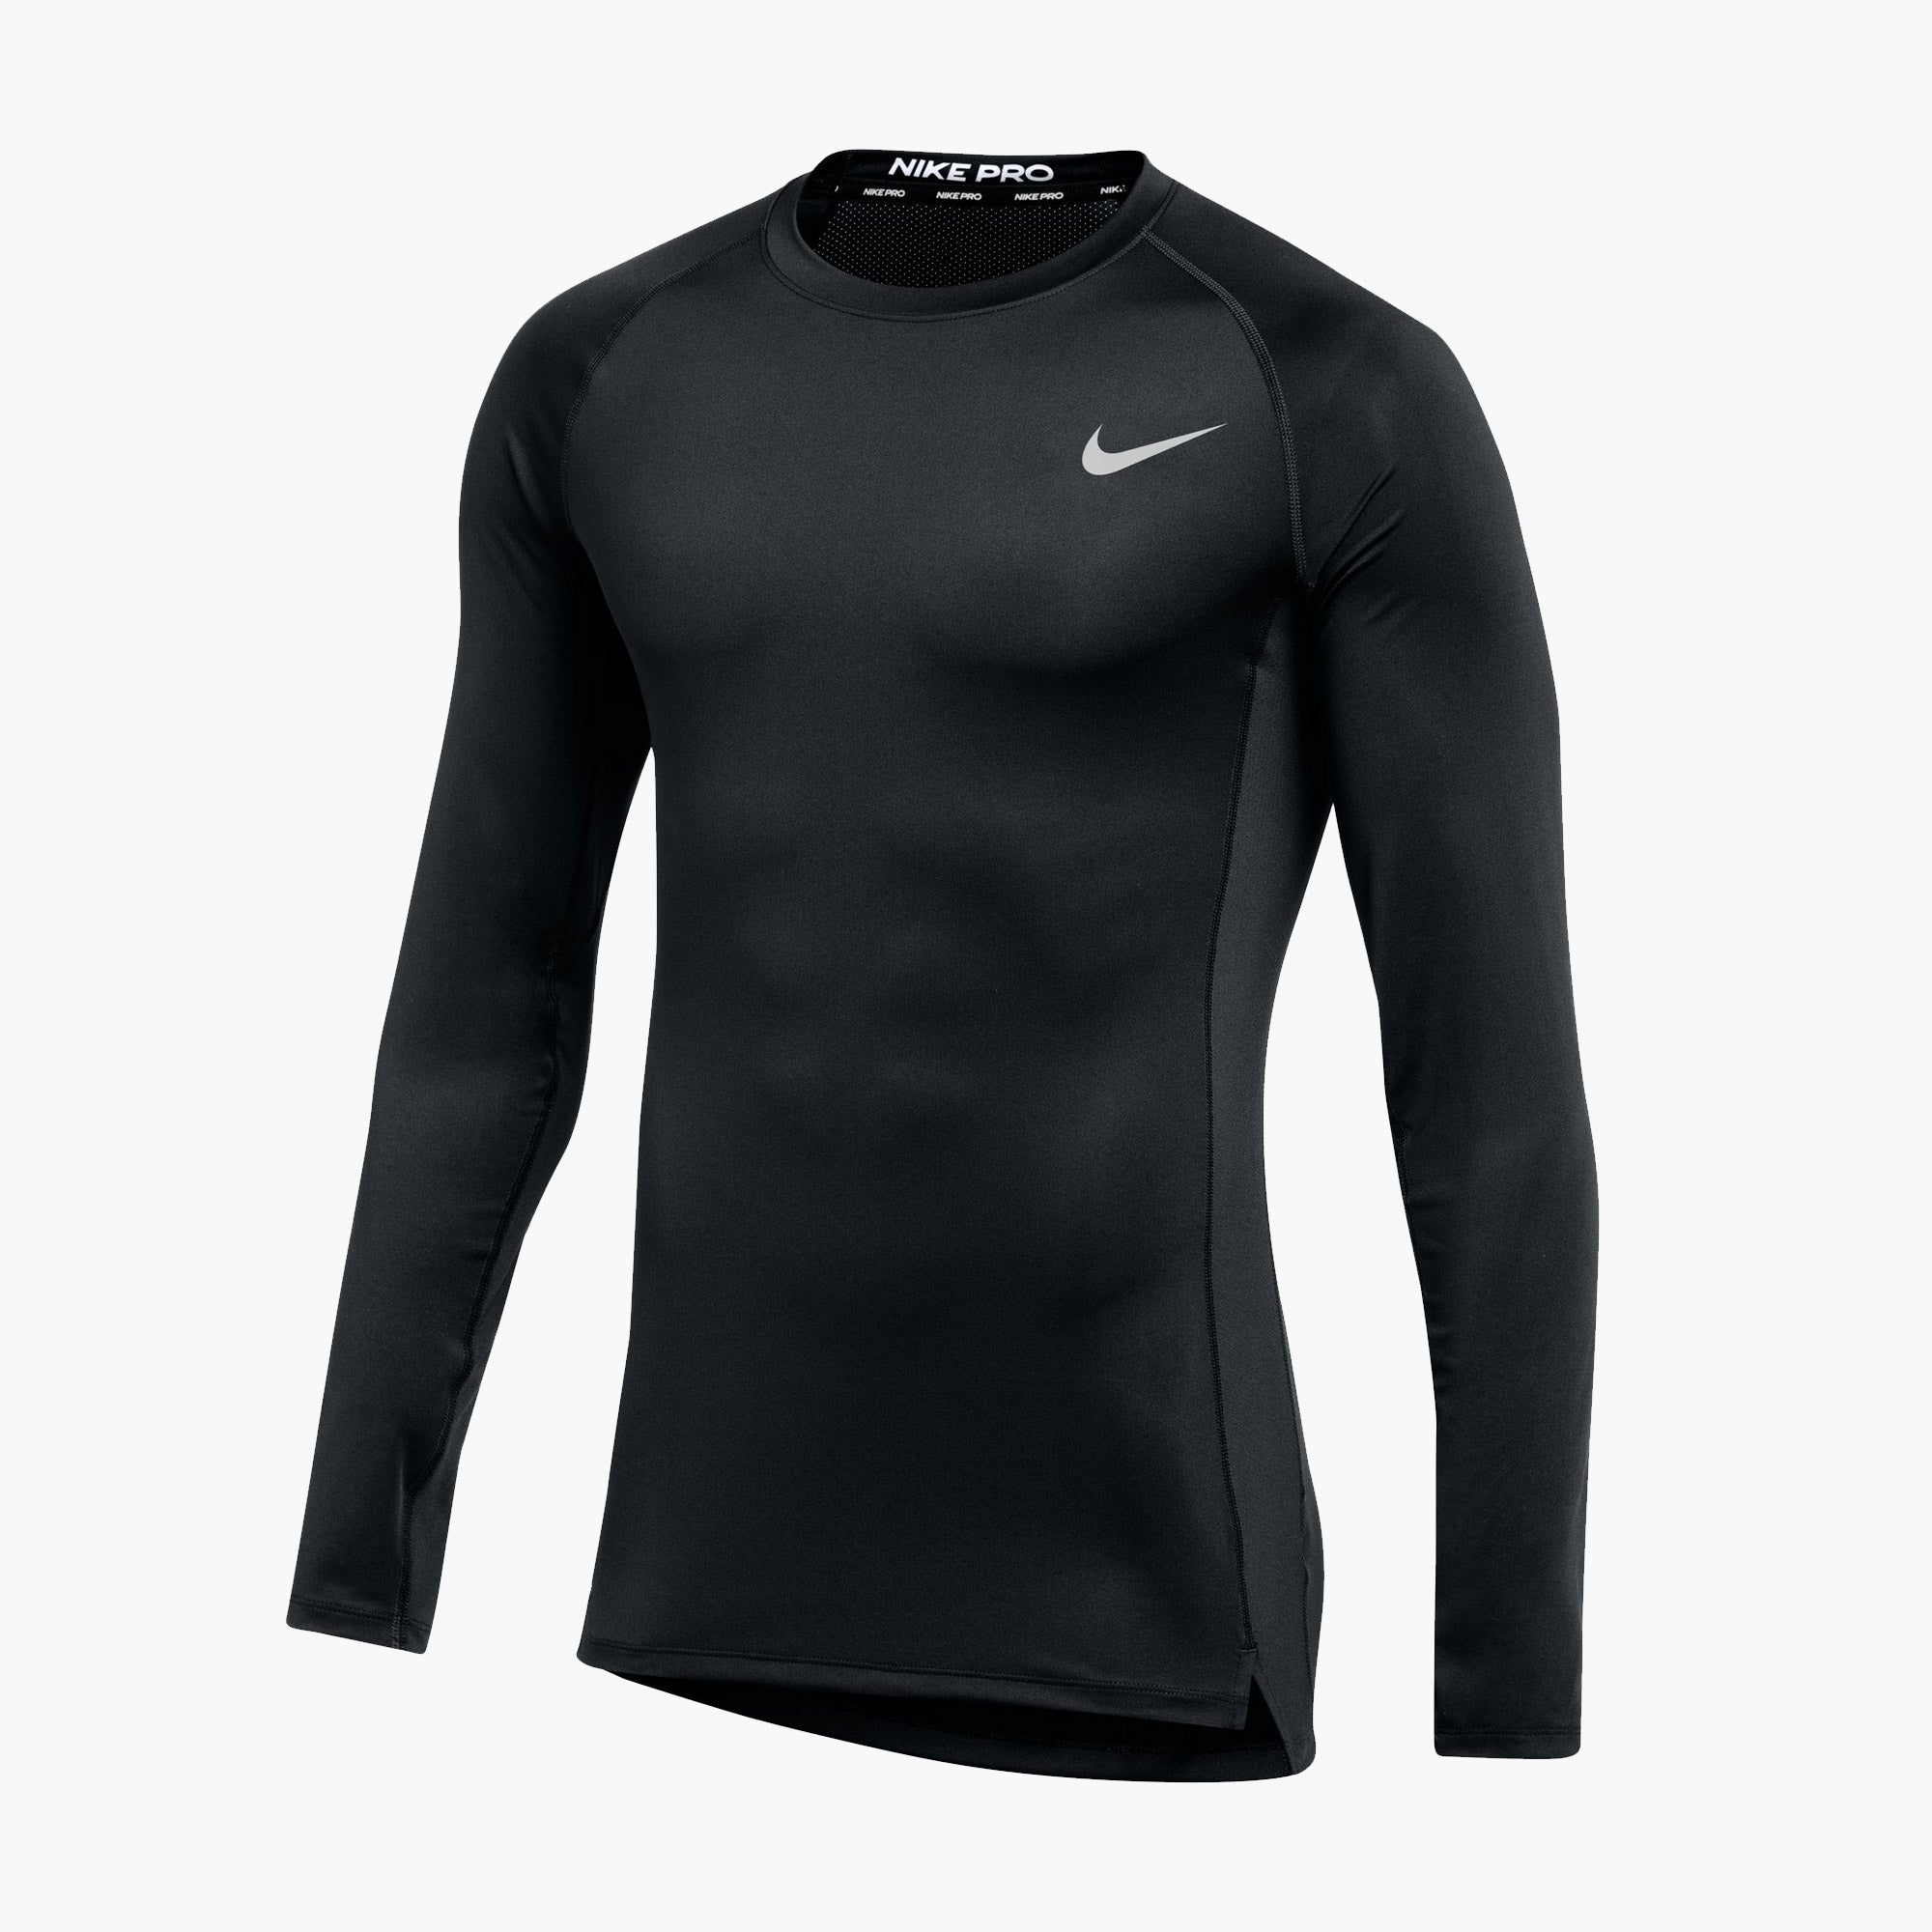 Nike Pro Training baselayer t-shirt in black